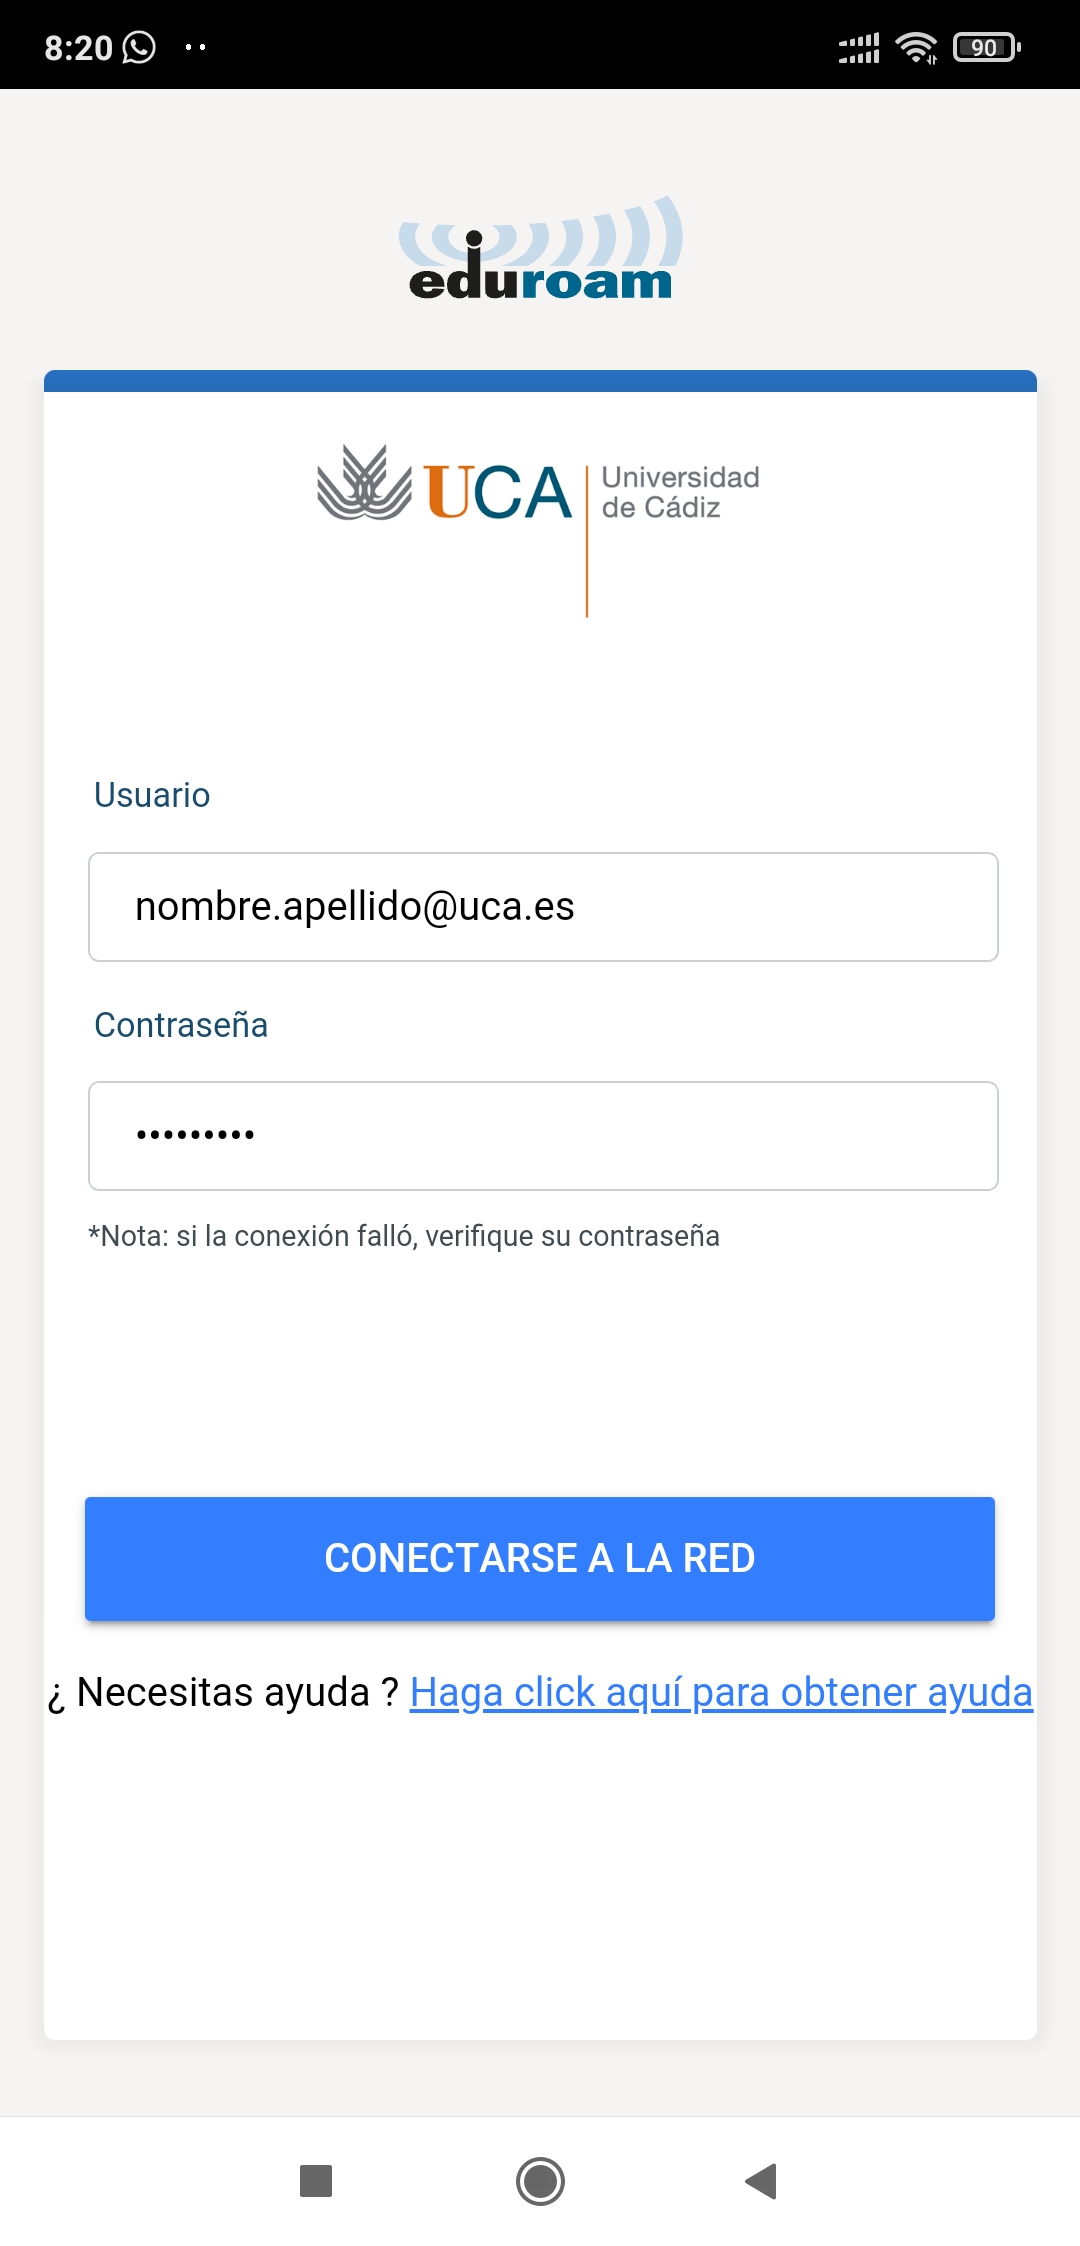 https://webmerlin.uca.es/webmerlin/attachment.do?folder=INBOX&uid=208162&parte=2